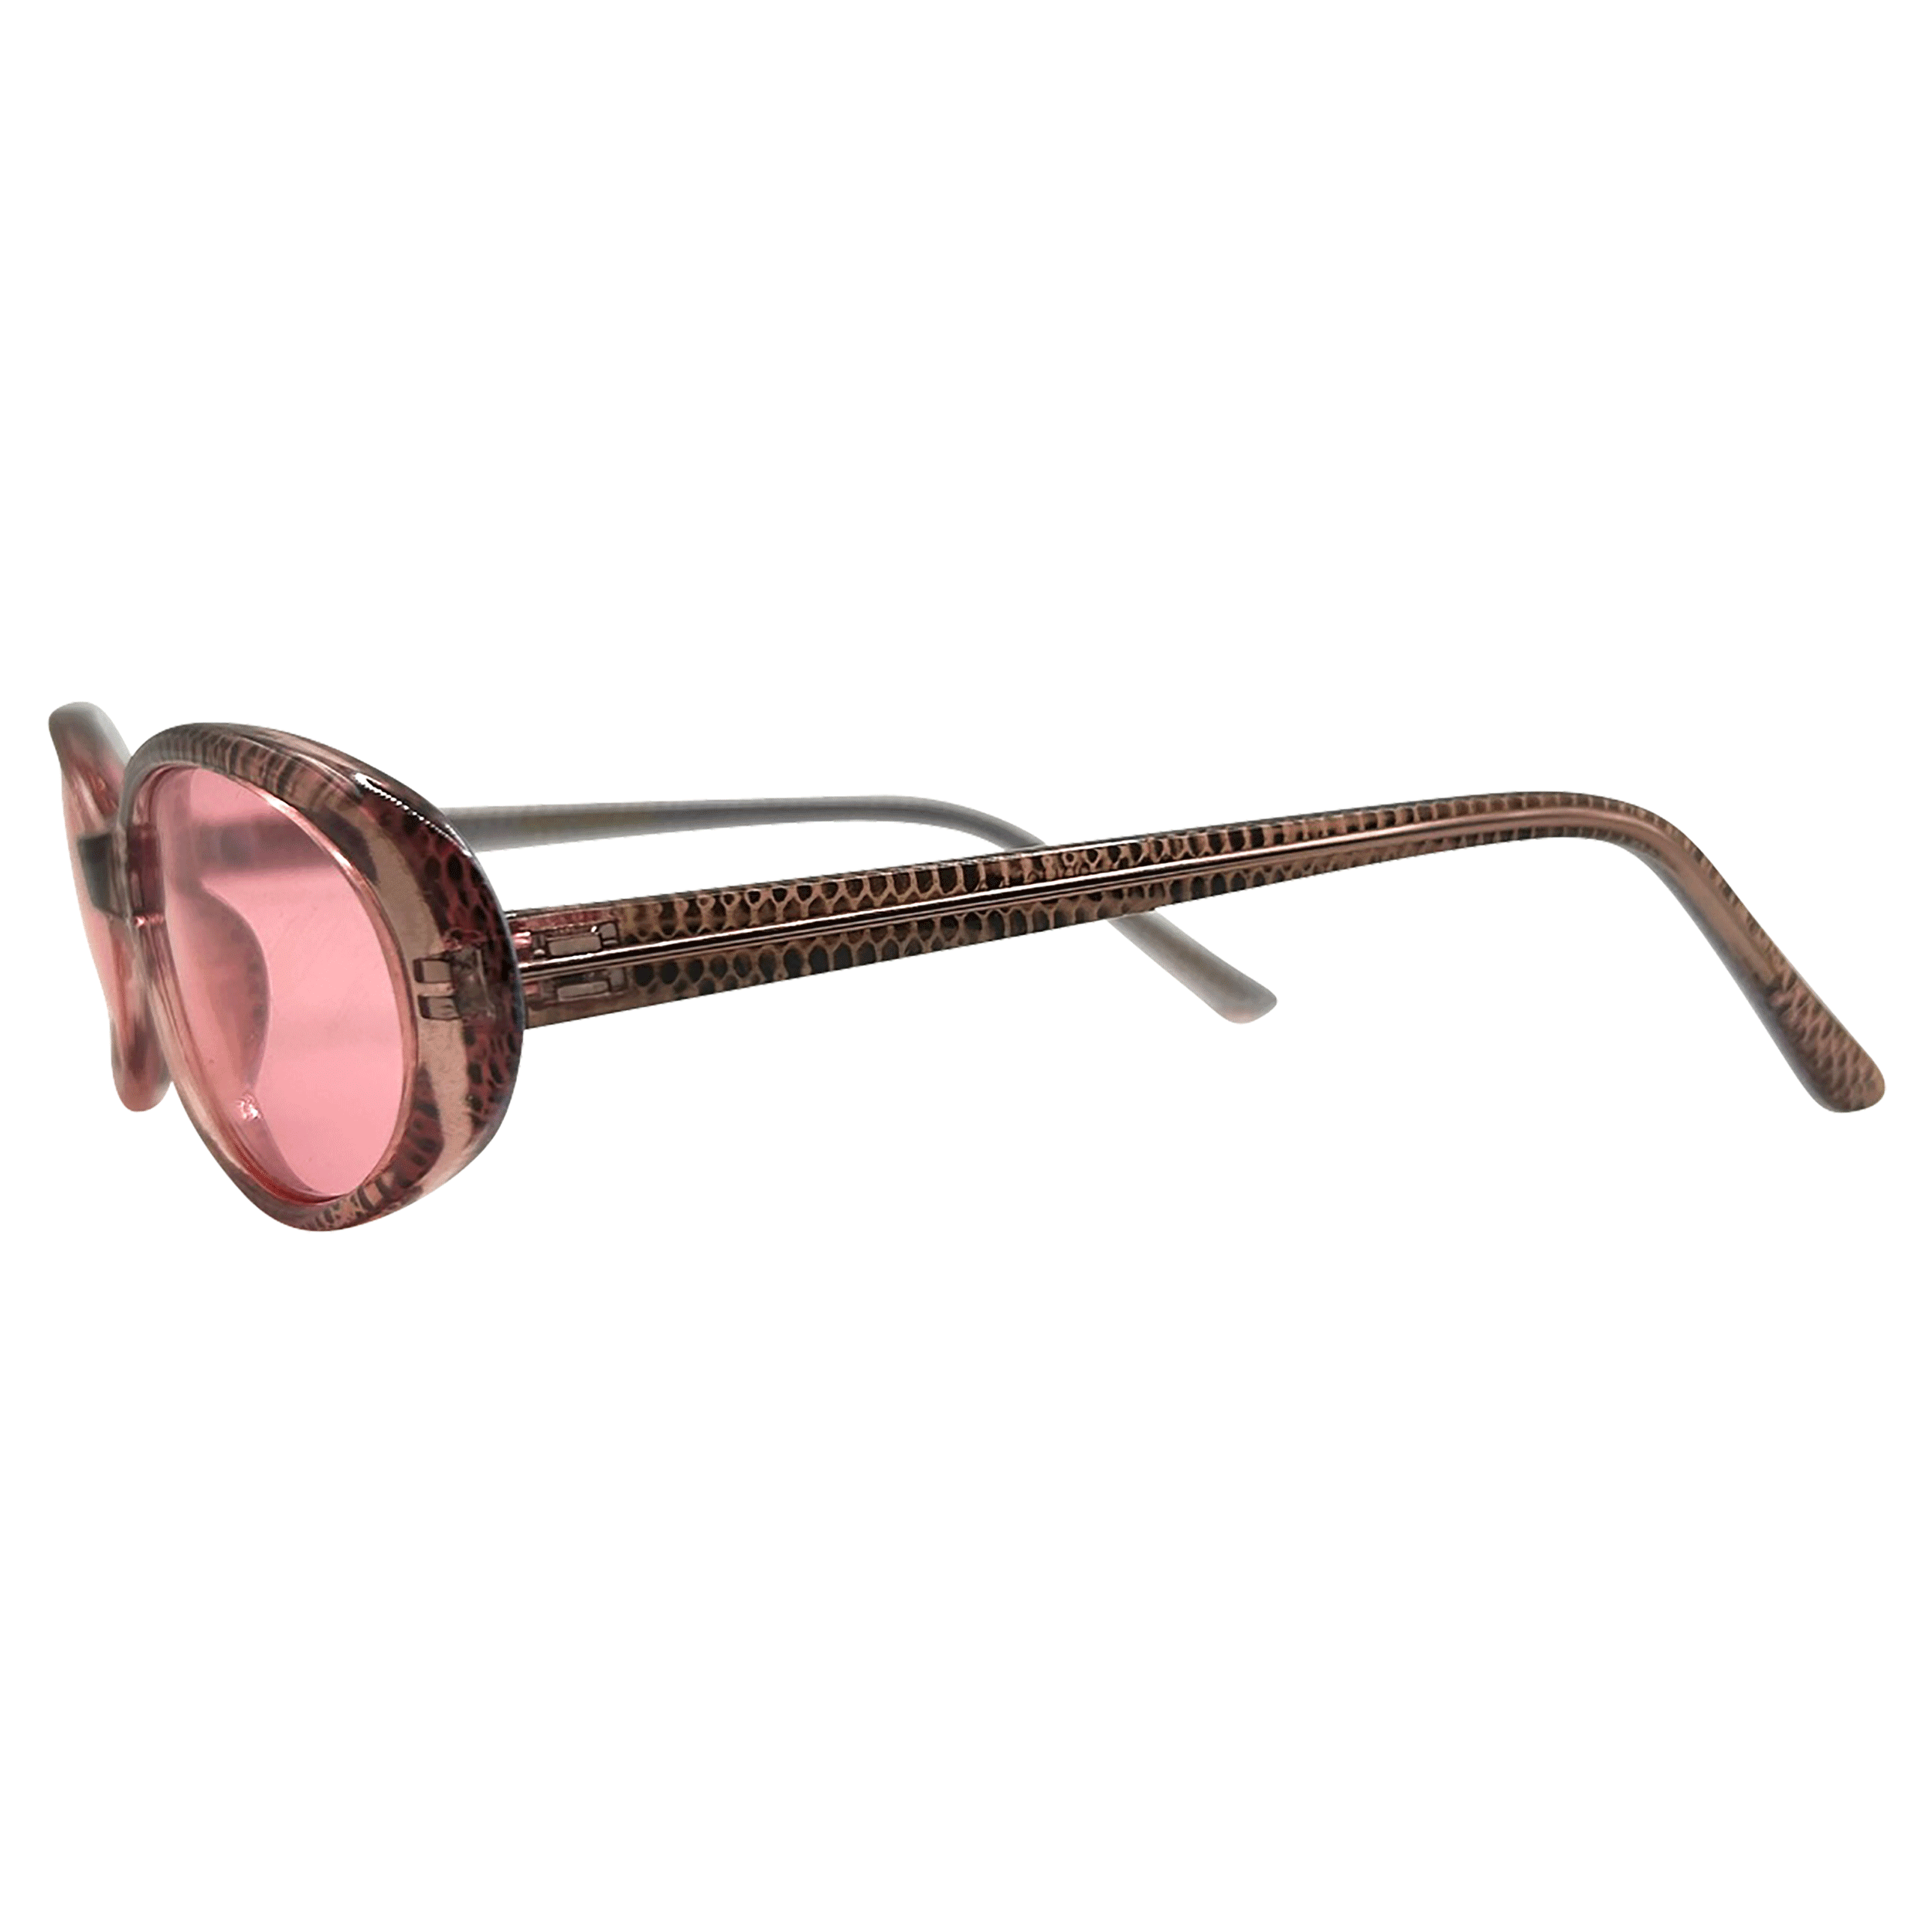 FANG Oval Vintage Sunglasses